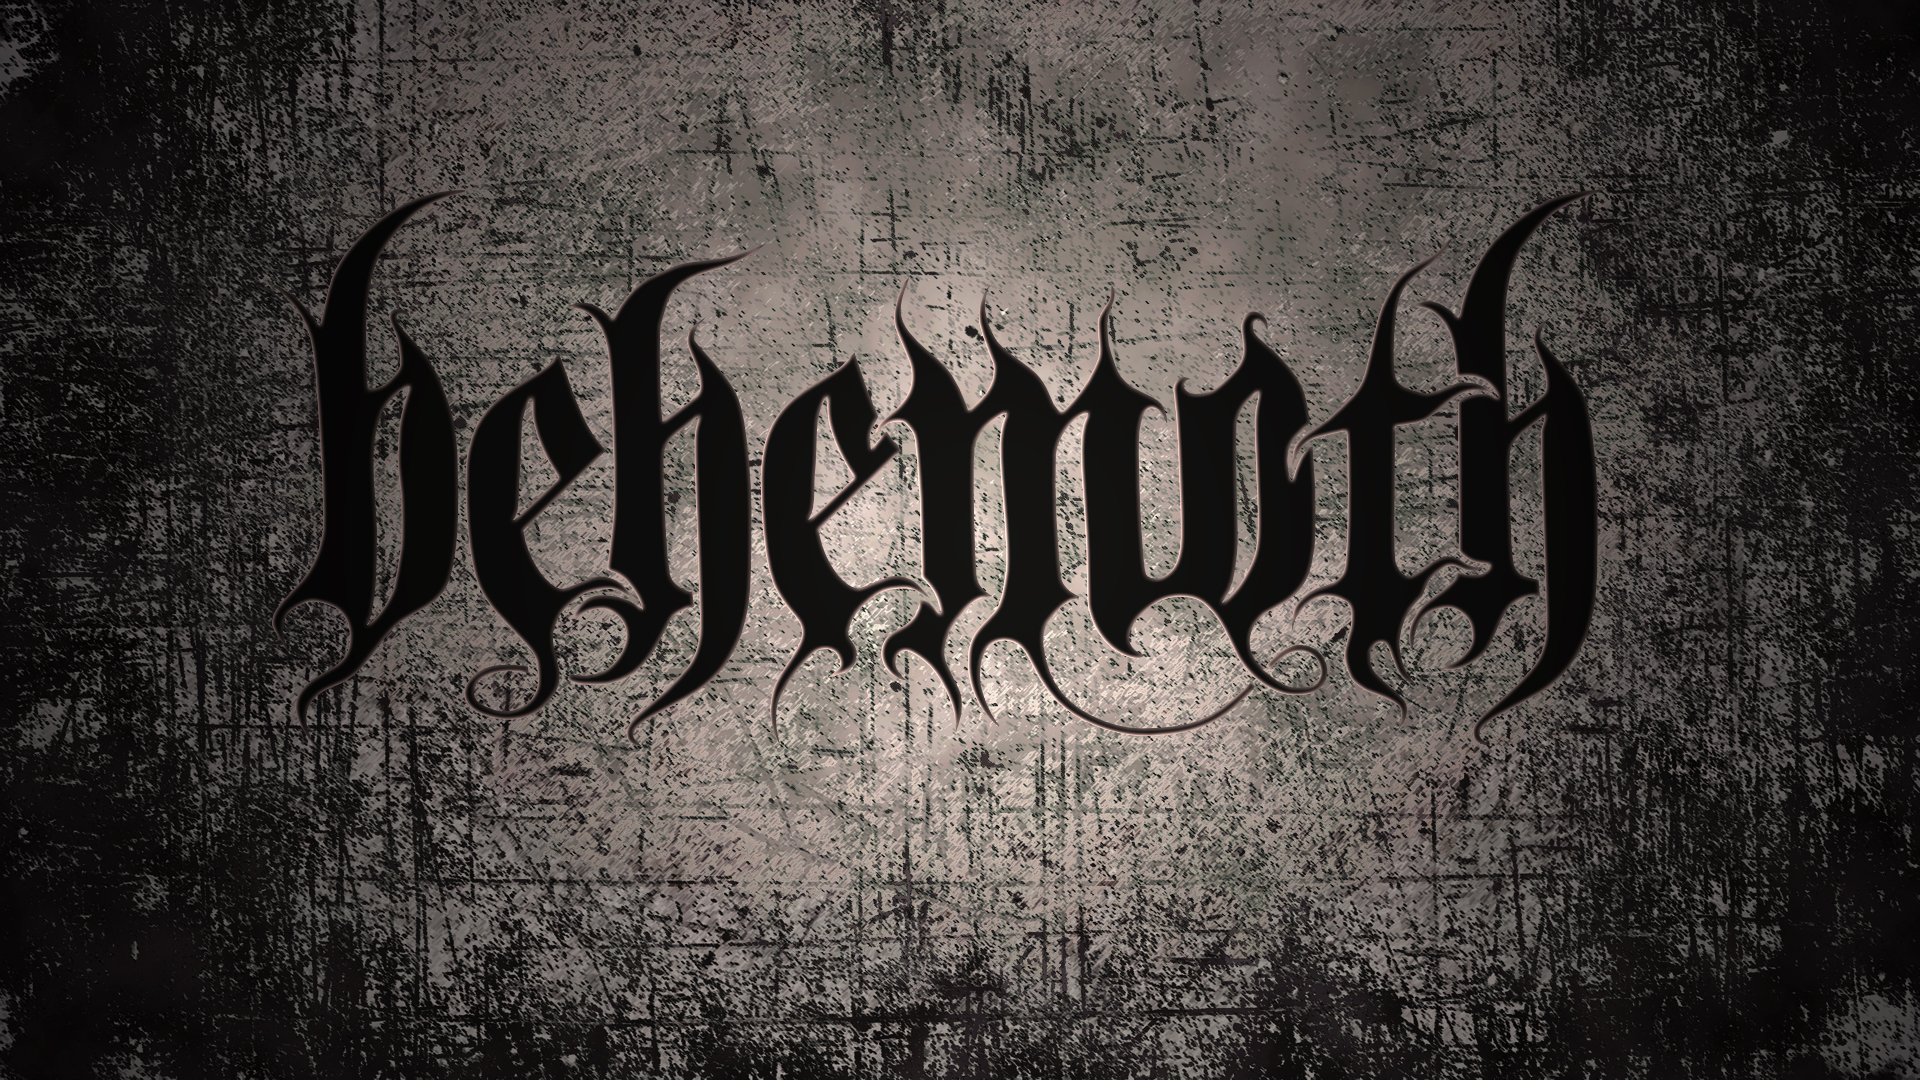 music, behemoth